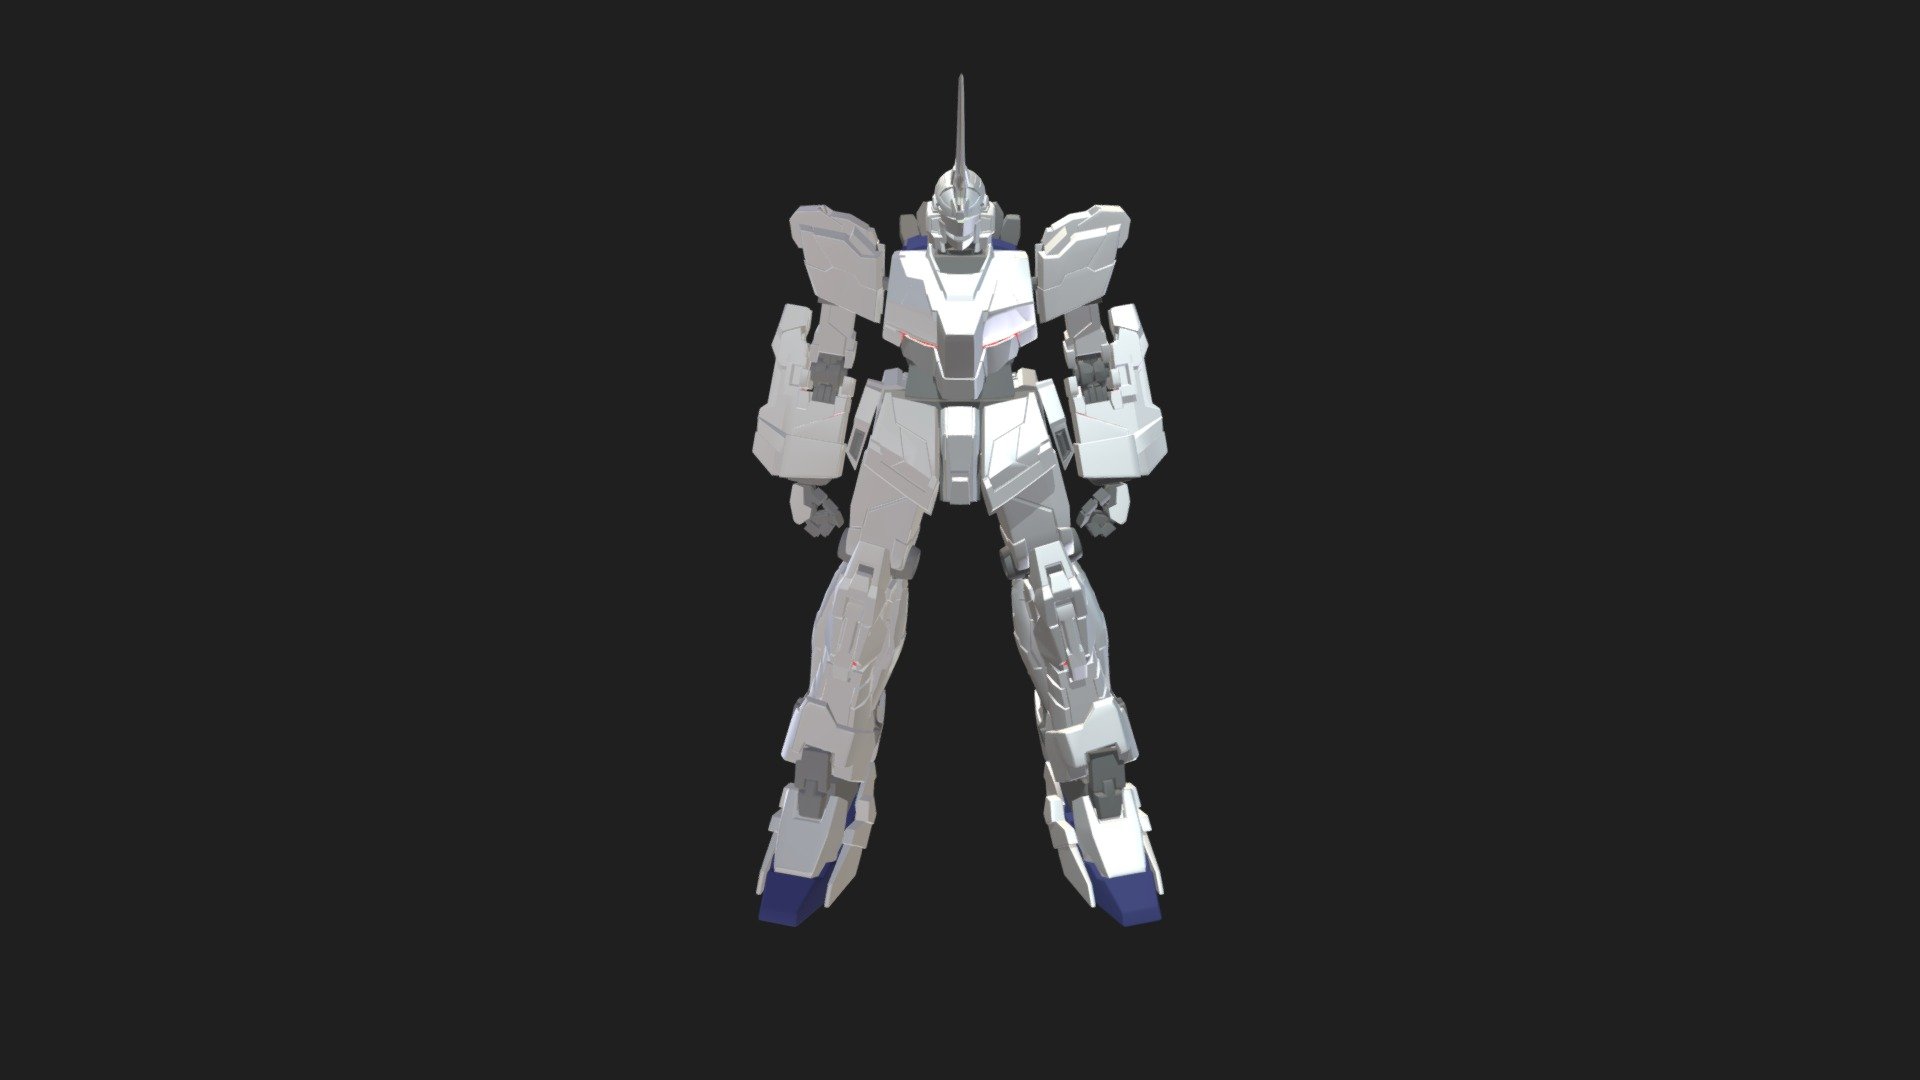 Maya Model and animation transformation 
Fanart from Mobile Suit Gundam Unicorn - RX-0 Unicorn Gundam - 3D model by KelvinCheah 3d model